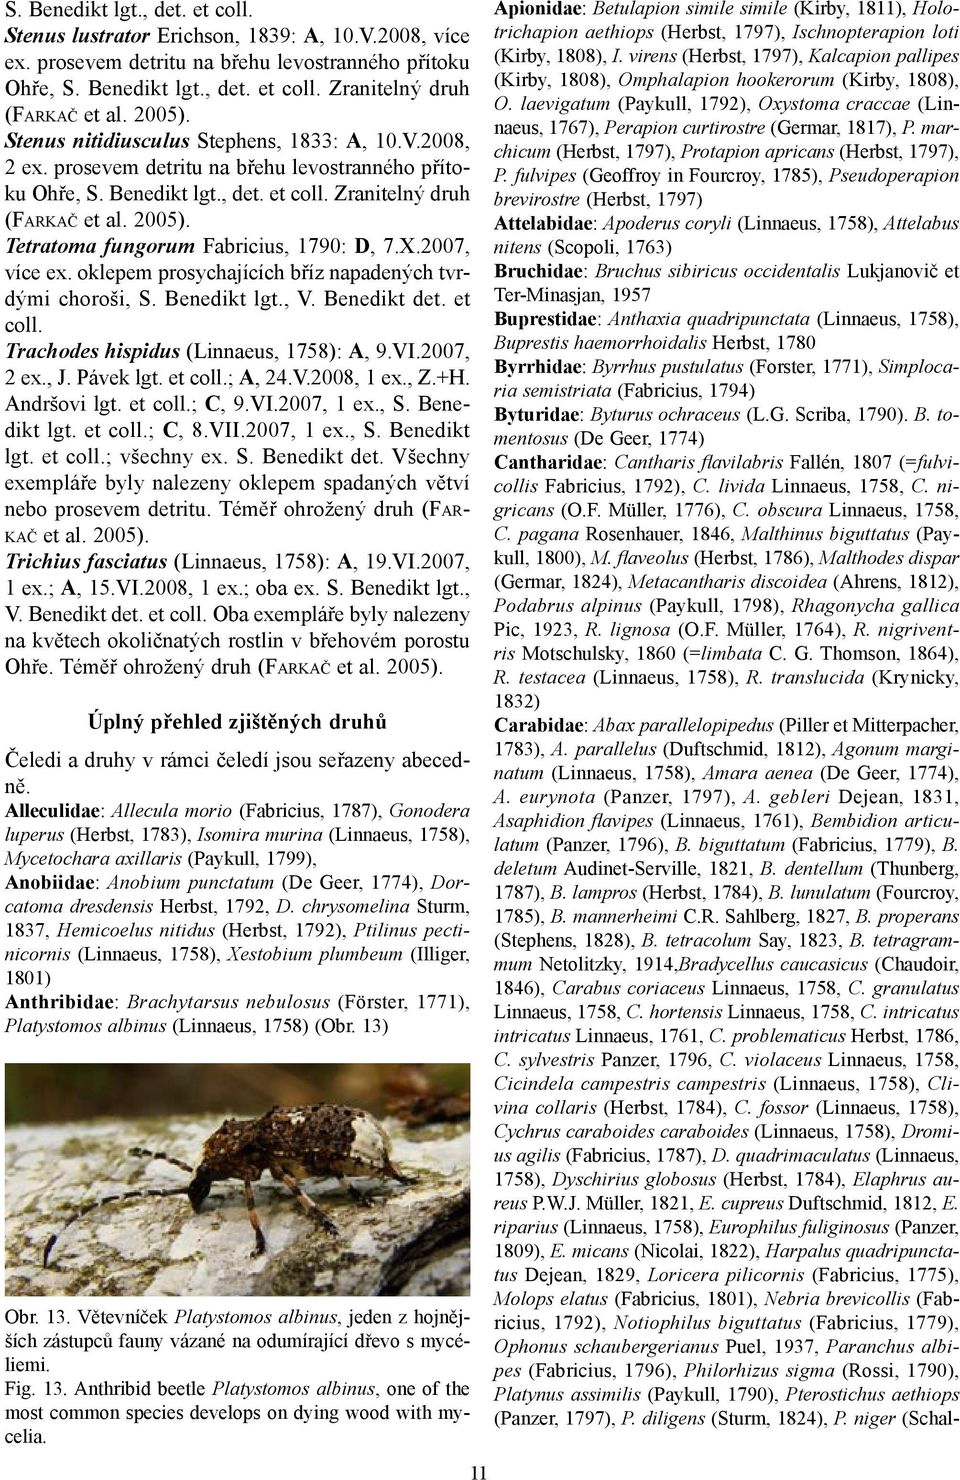 Tetratoma fungorum Fabricius, 1790: D, 7.X.2007, více ex. oklepem prosychajících bříz napadených tvrdými choroši, S. Benedikt lgt., V. Benedikt det. et coll. Trachodes hispidus (Linnaeus, 1758): A, 9.